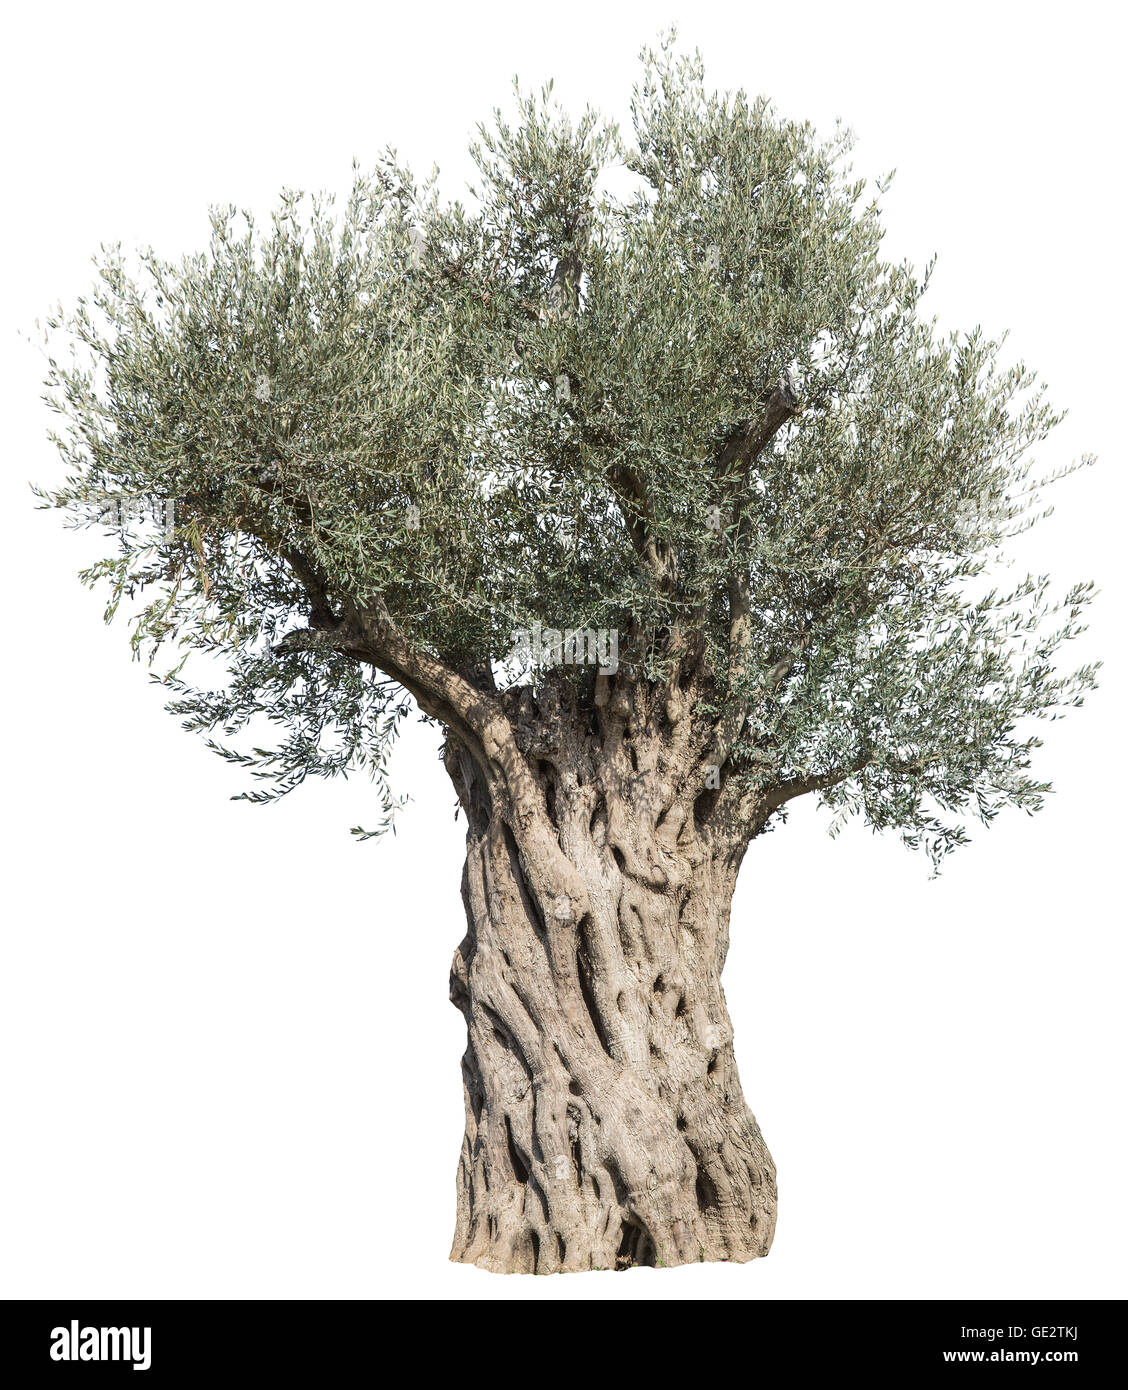 Alter Olivenbaum. Datei enthält Beschneidungspfade. Stockfoto